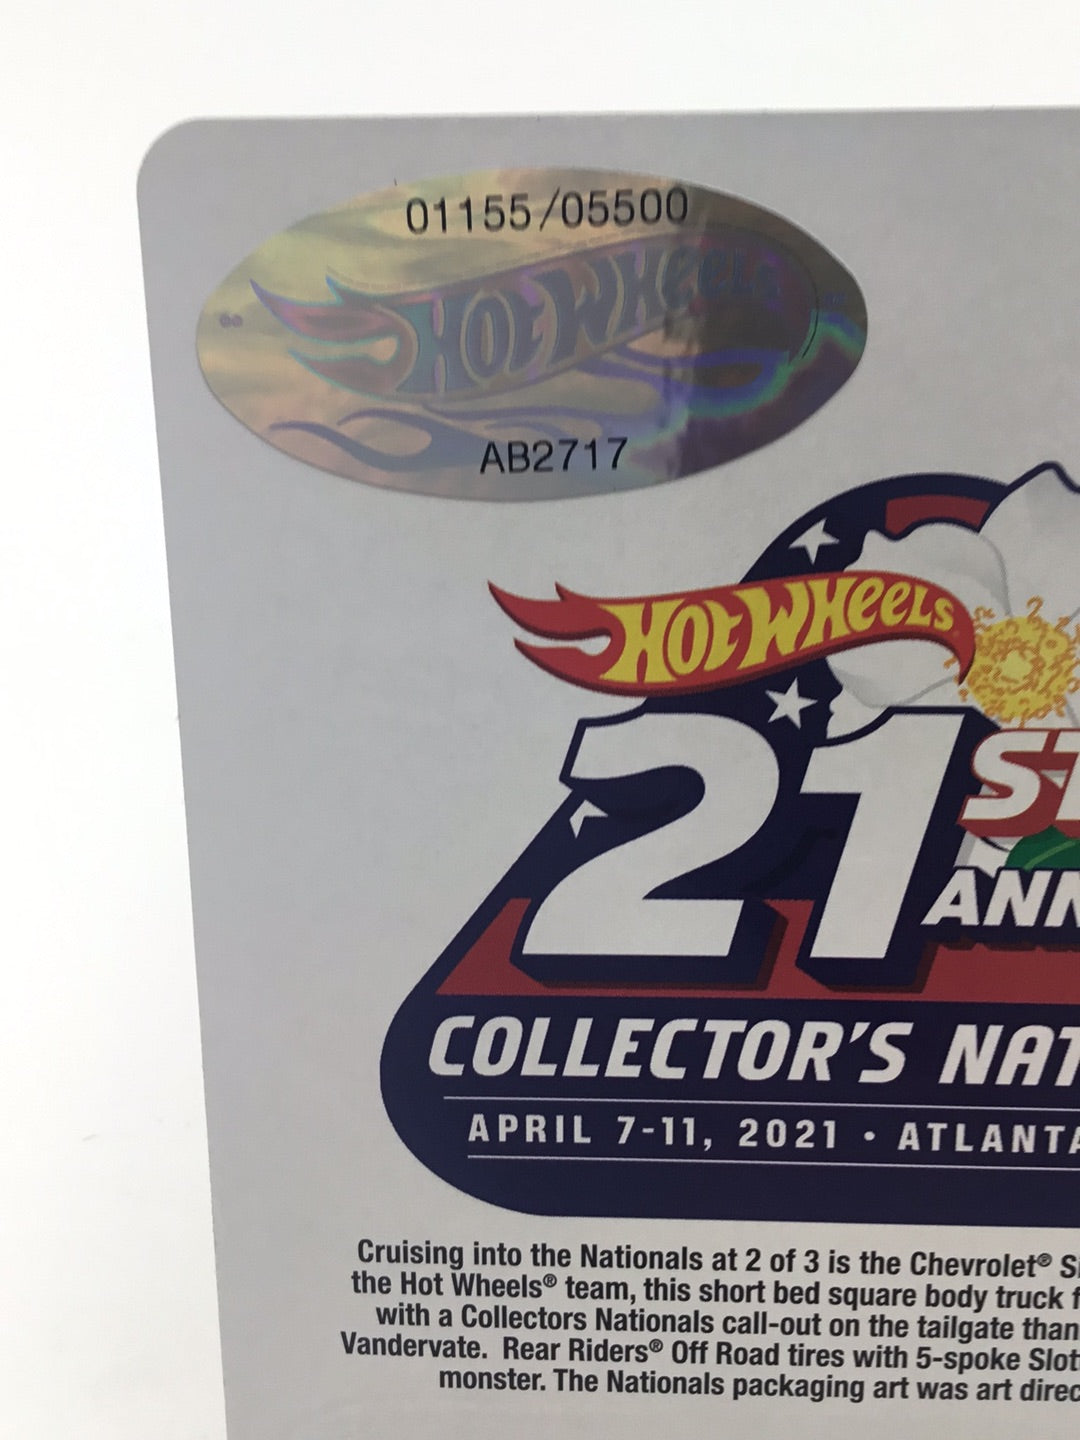 Hot wheels 21st annual collectors nationals 83 Silverado 4x4 1155/5500